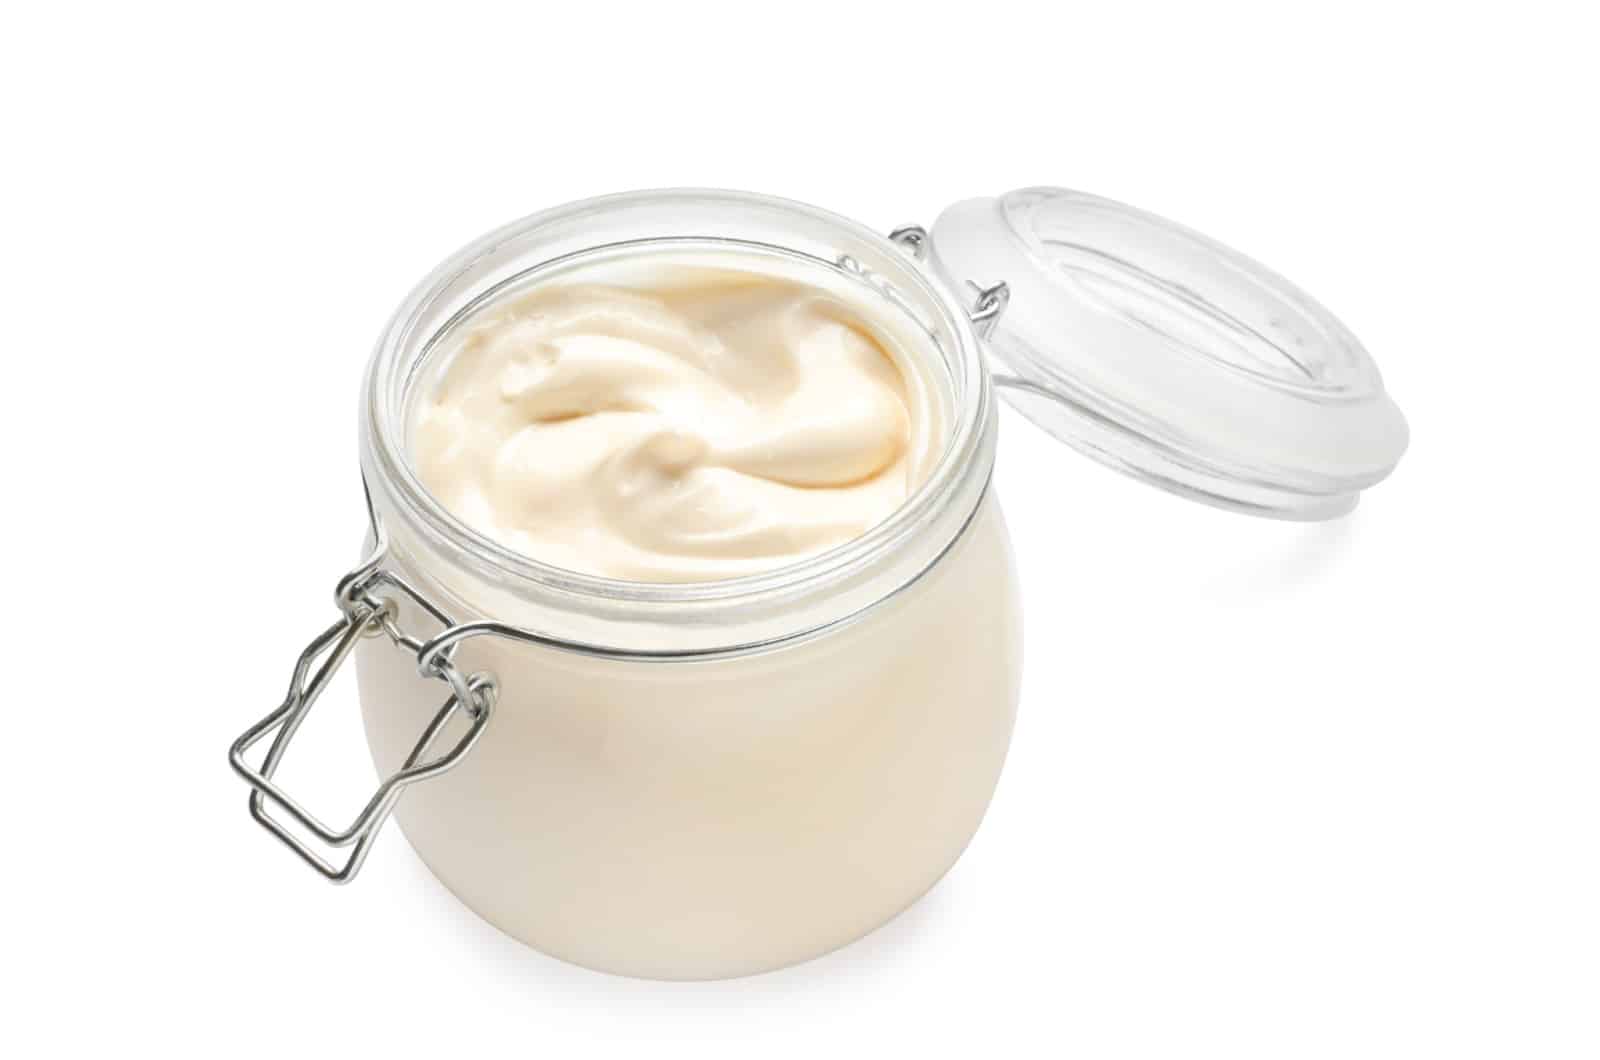 mayonnaise in a glass jar